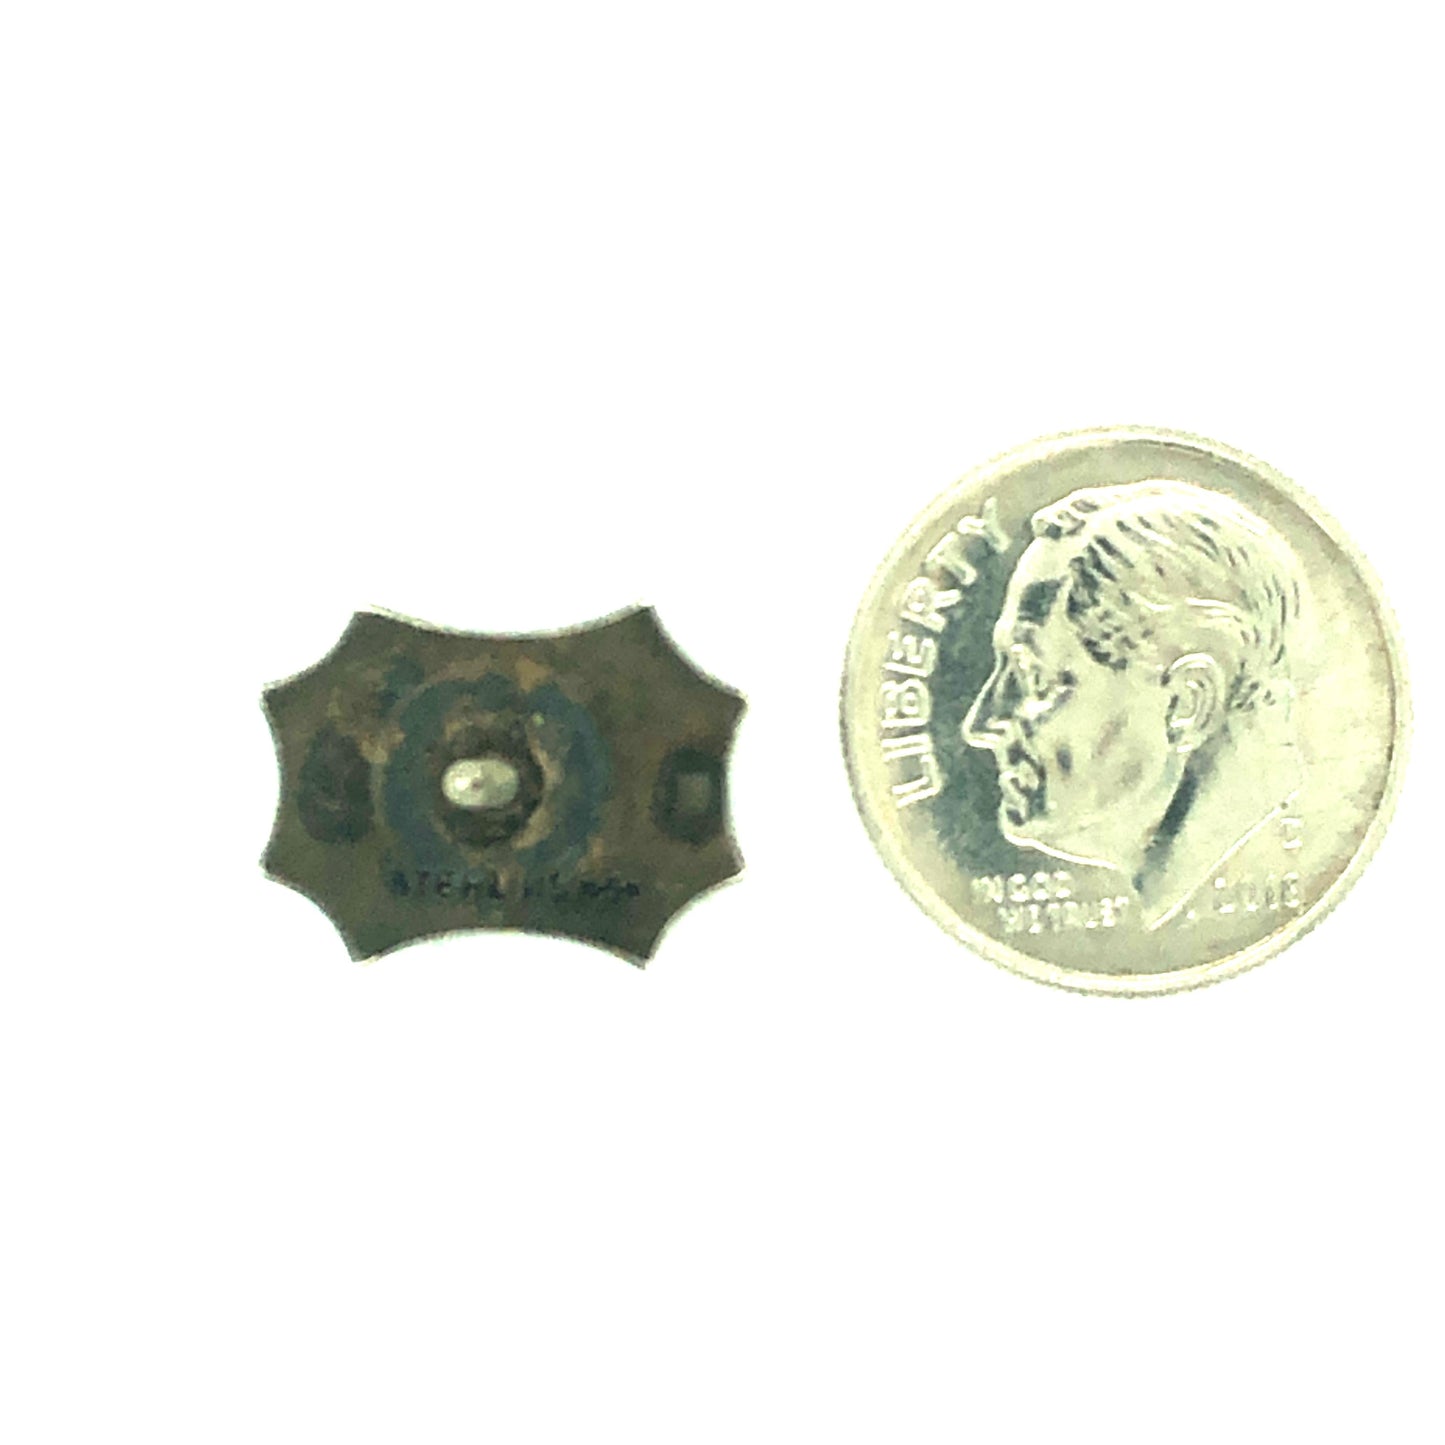 Sterling Silver Kappa Delta Chi (ΚΔΧ) Sorority Pin